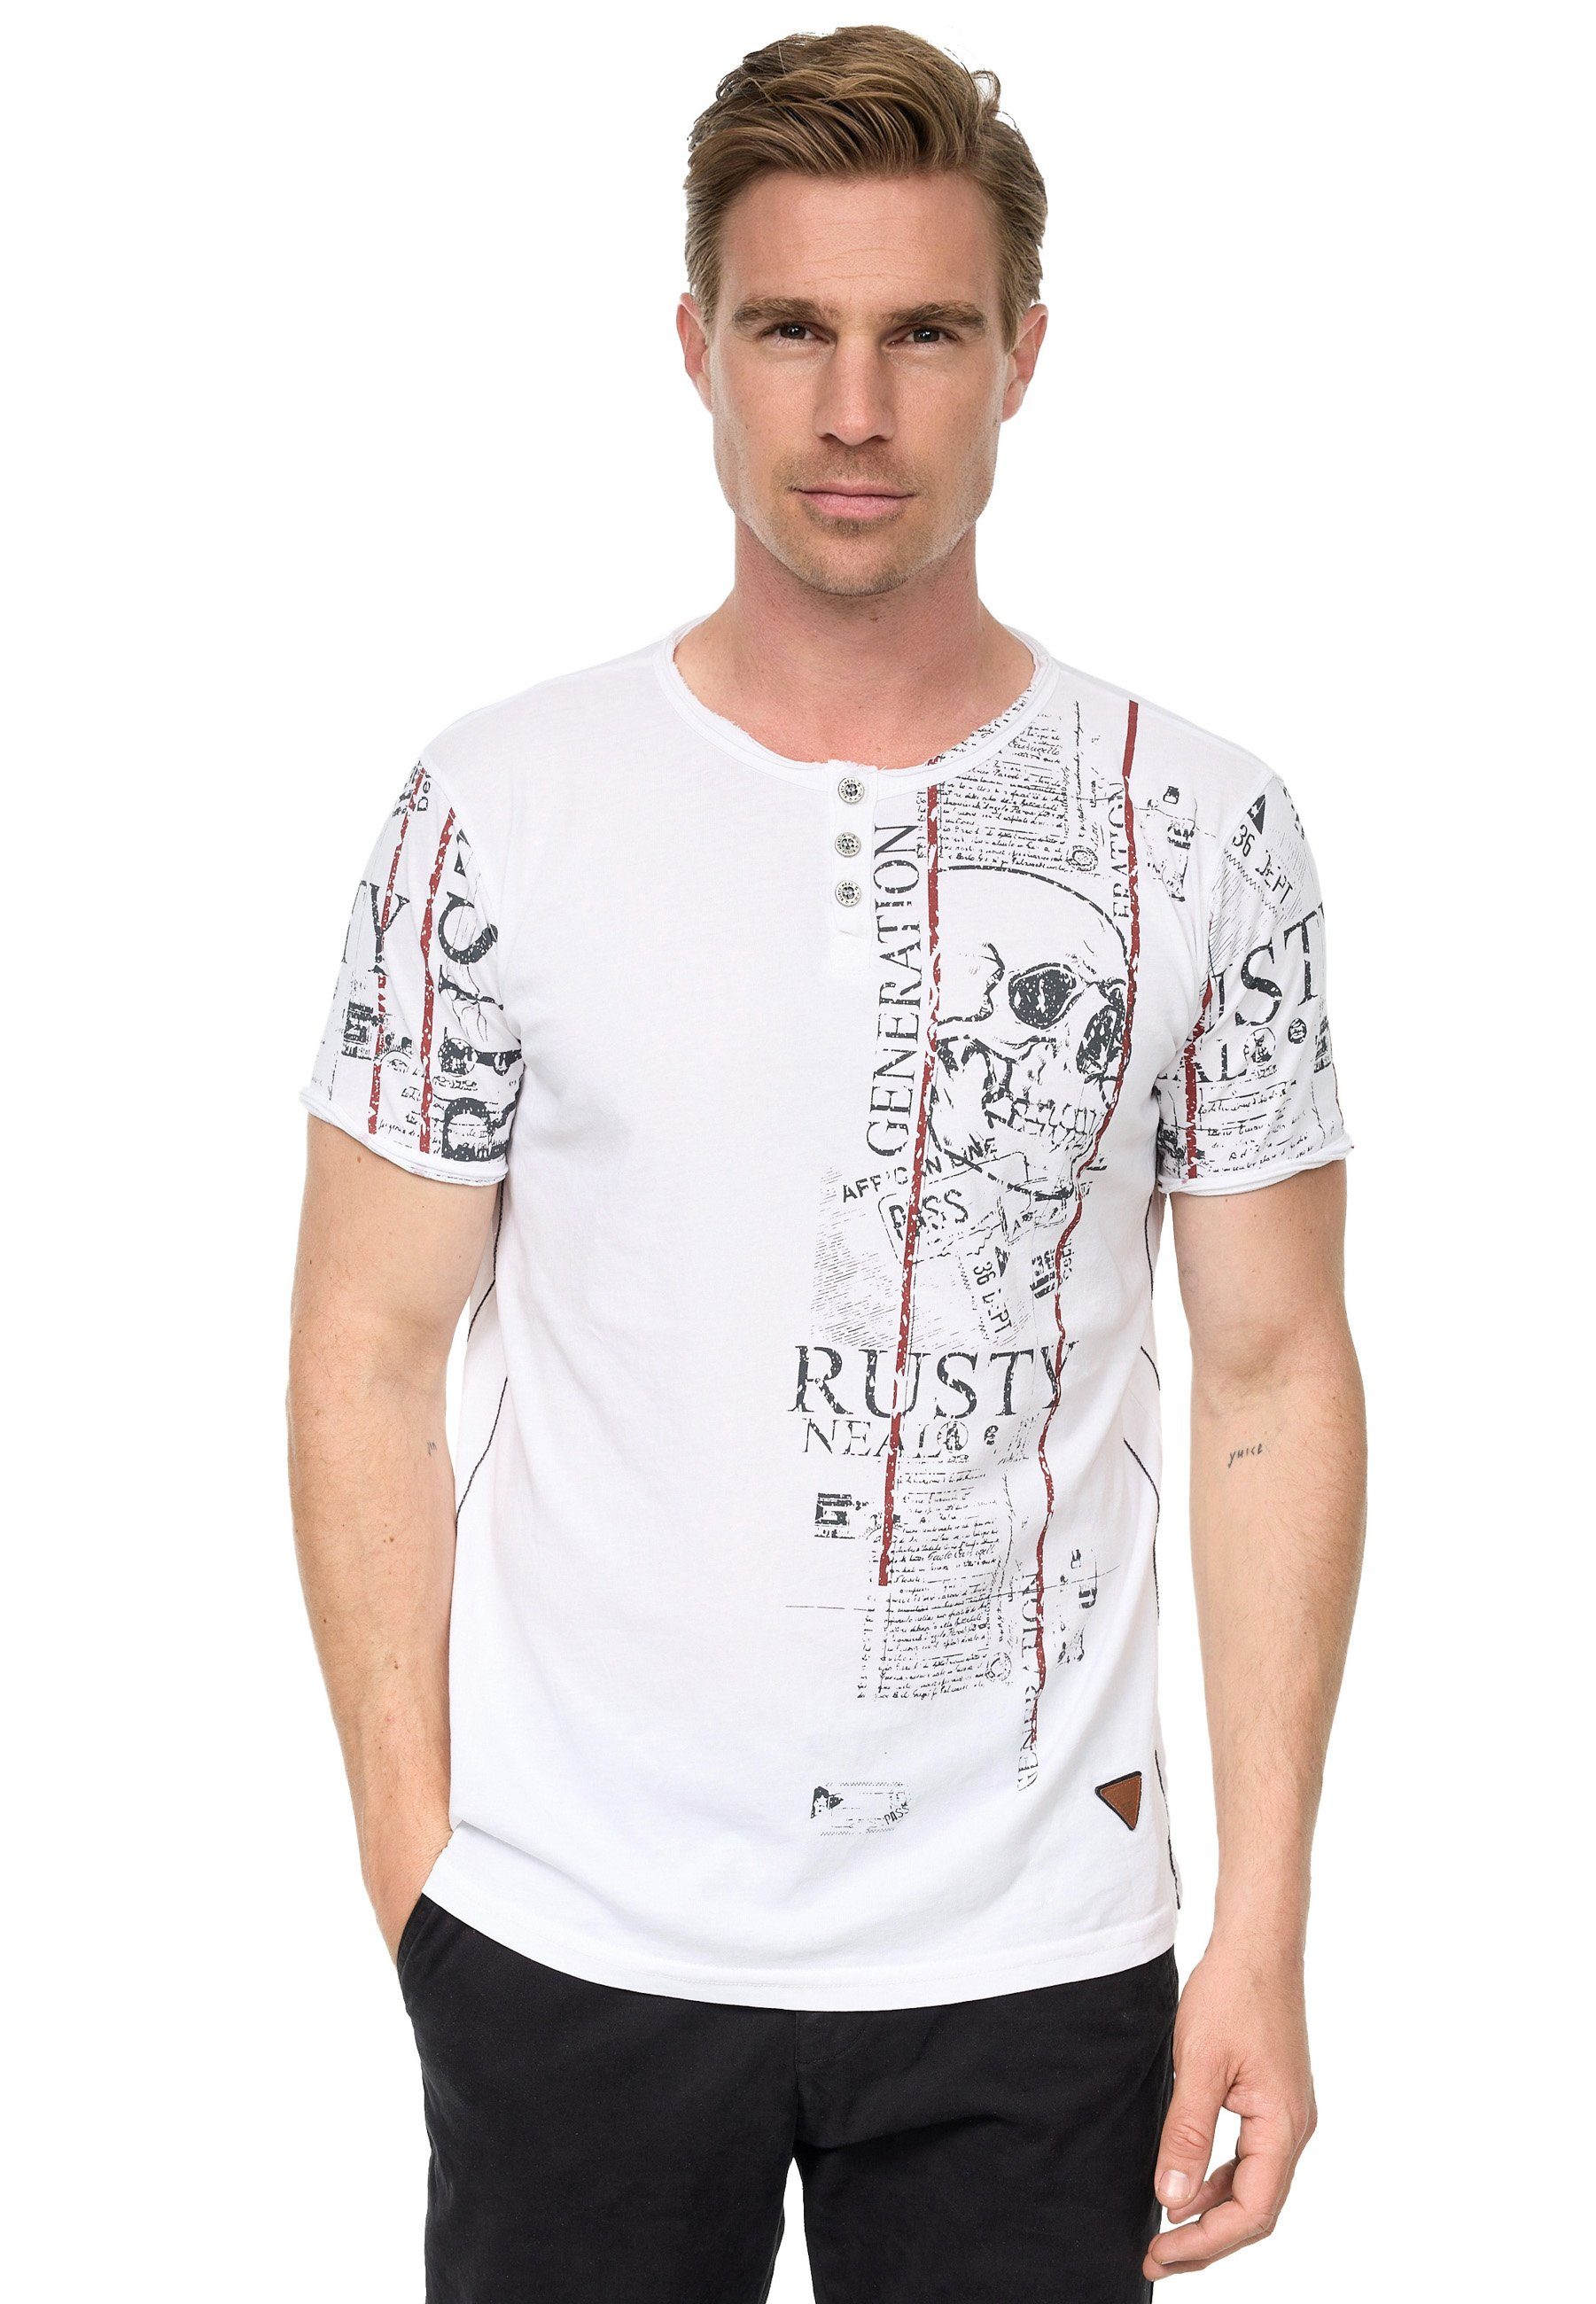 Rusty Neal T-Shirt Allover-Print Used-Look im weiß mit